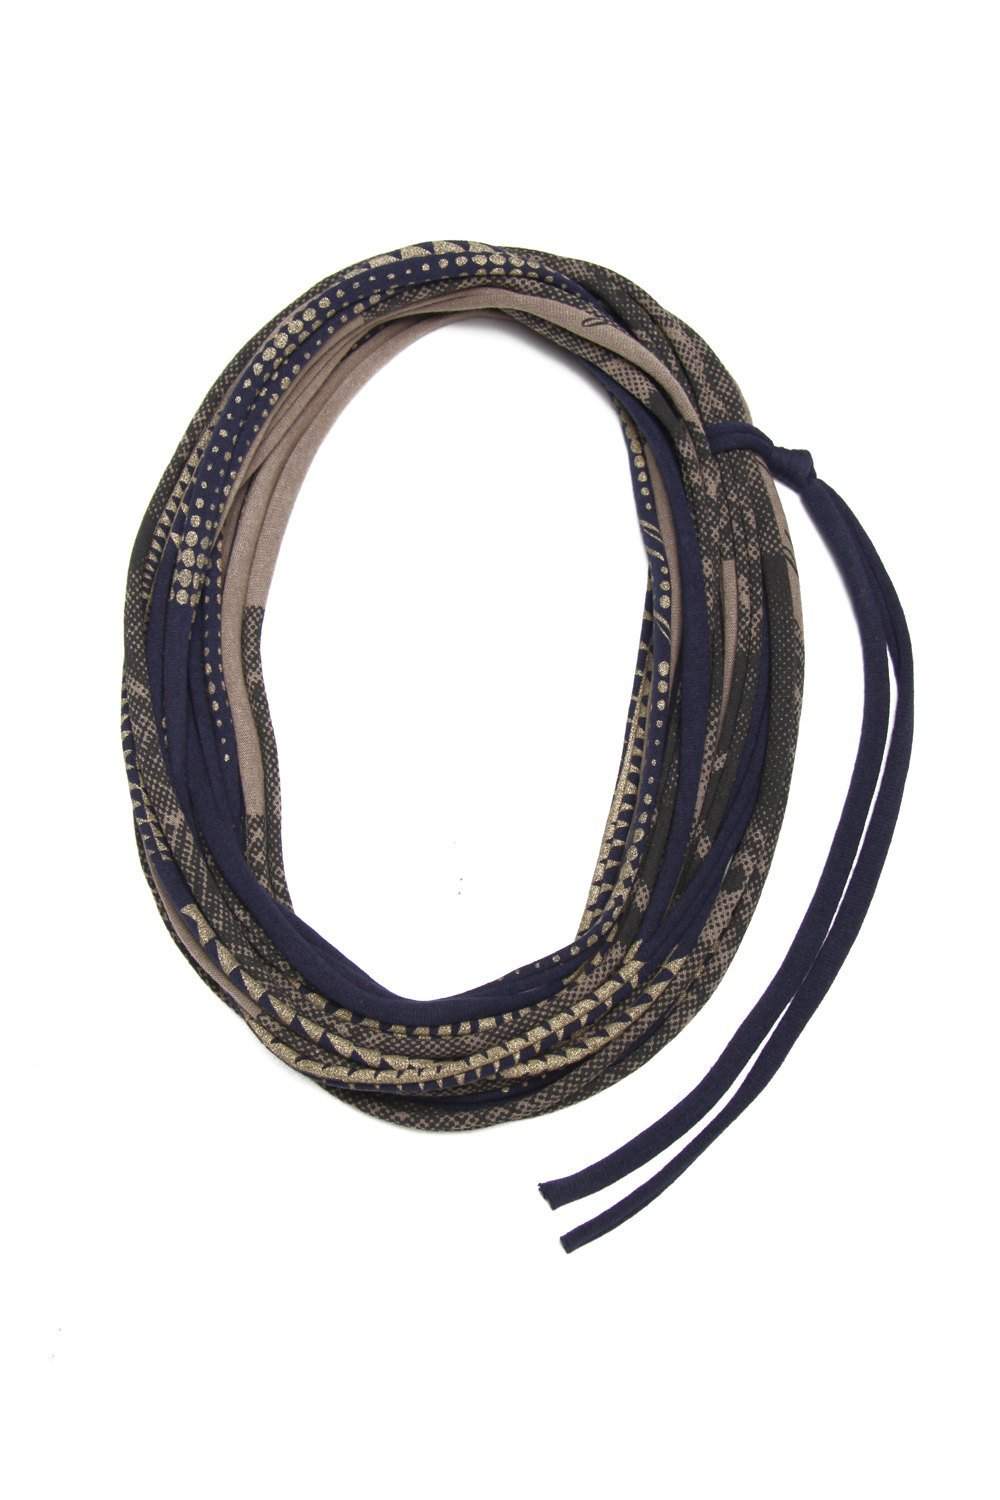 Navy Blue Beige Necklace-necklaces-Necklush